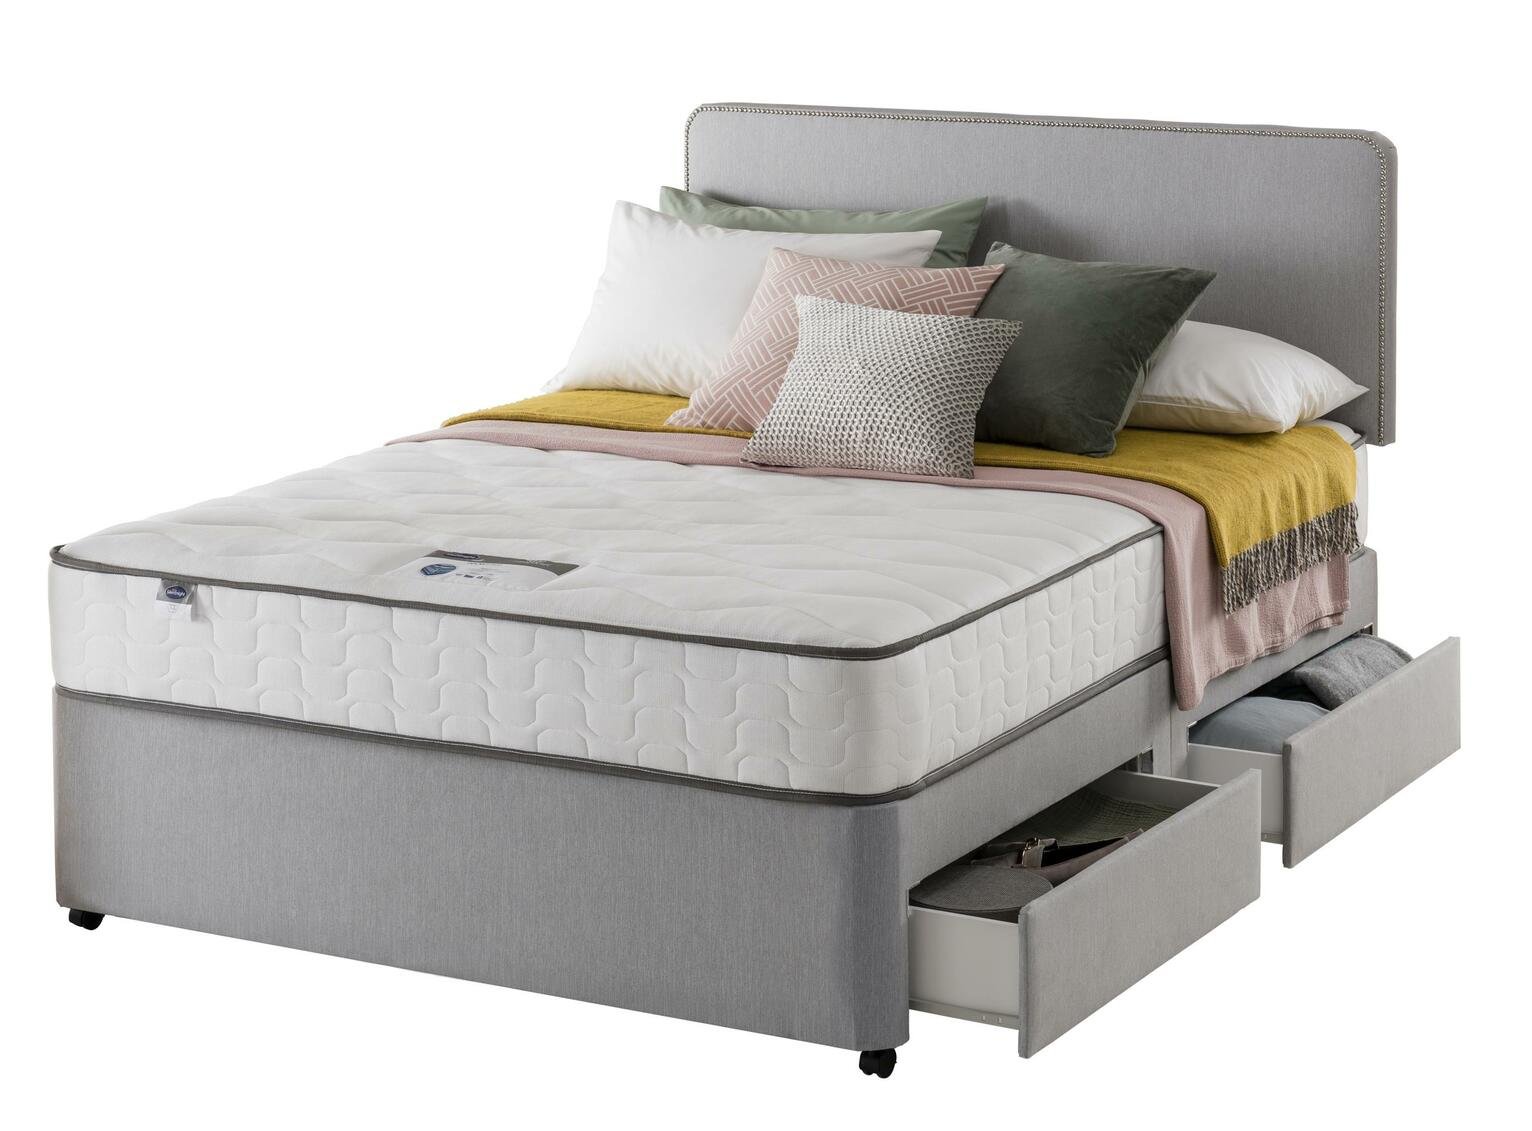 Silentnight Pavia Double Comfort 4 Drawer Divan Bed - Grey